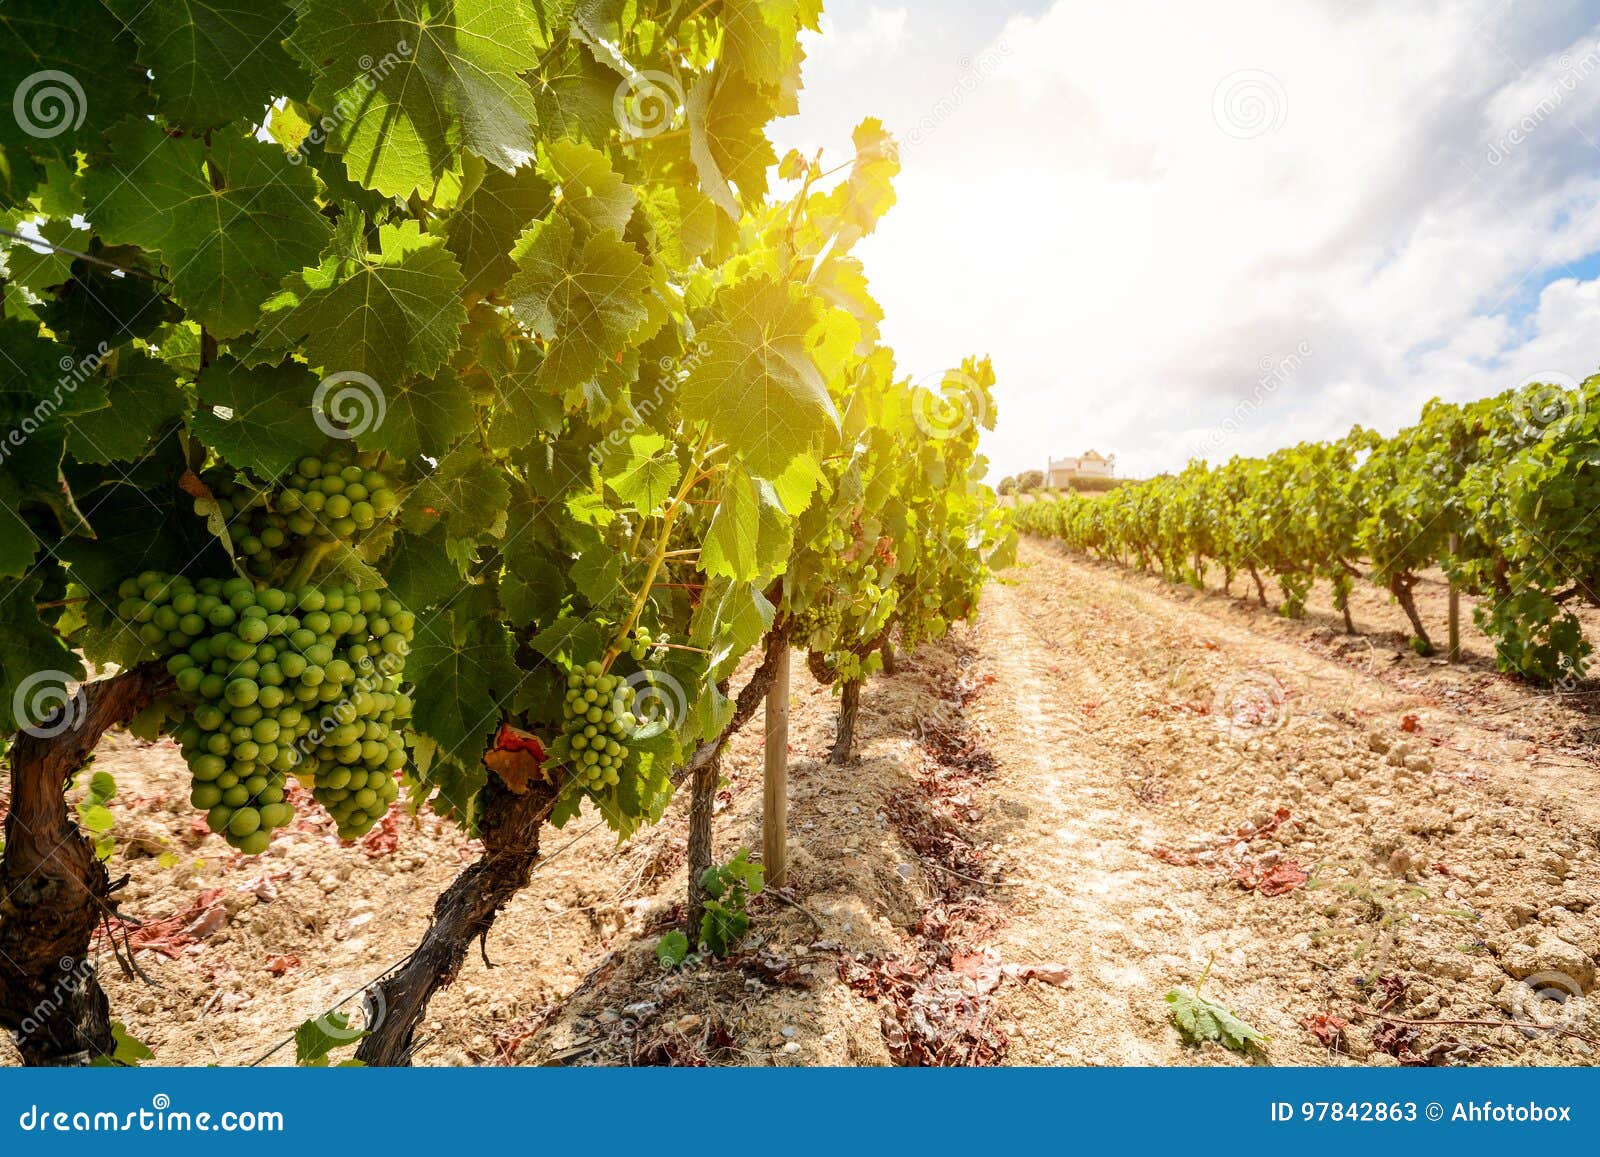 old vineyards with red wine grapes in the alentejo wine region near evora, portugal